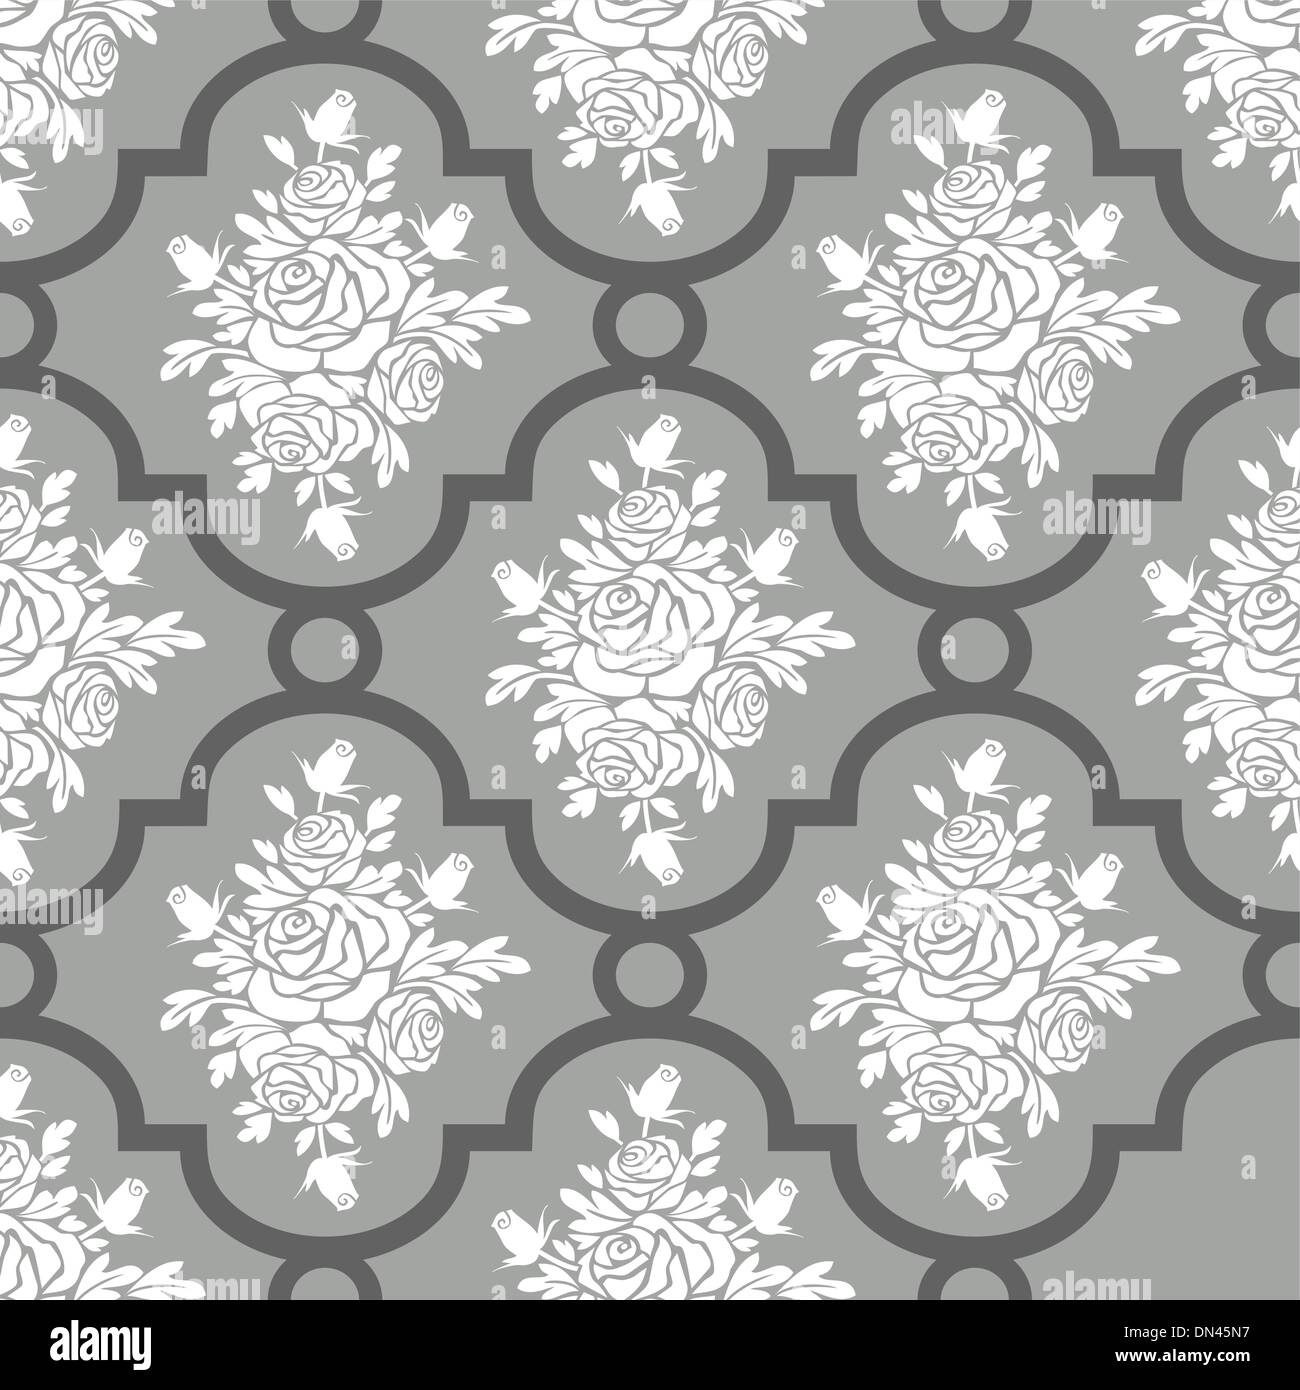 White roses seamless pattern Stock Vector